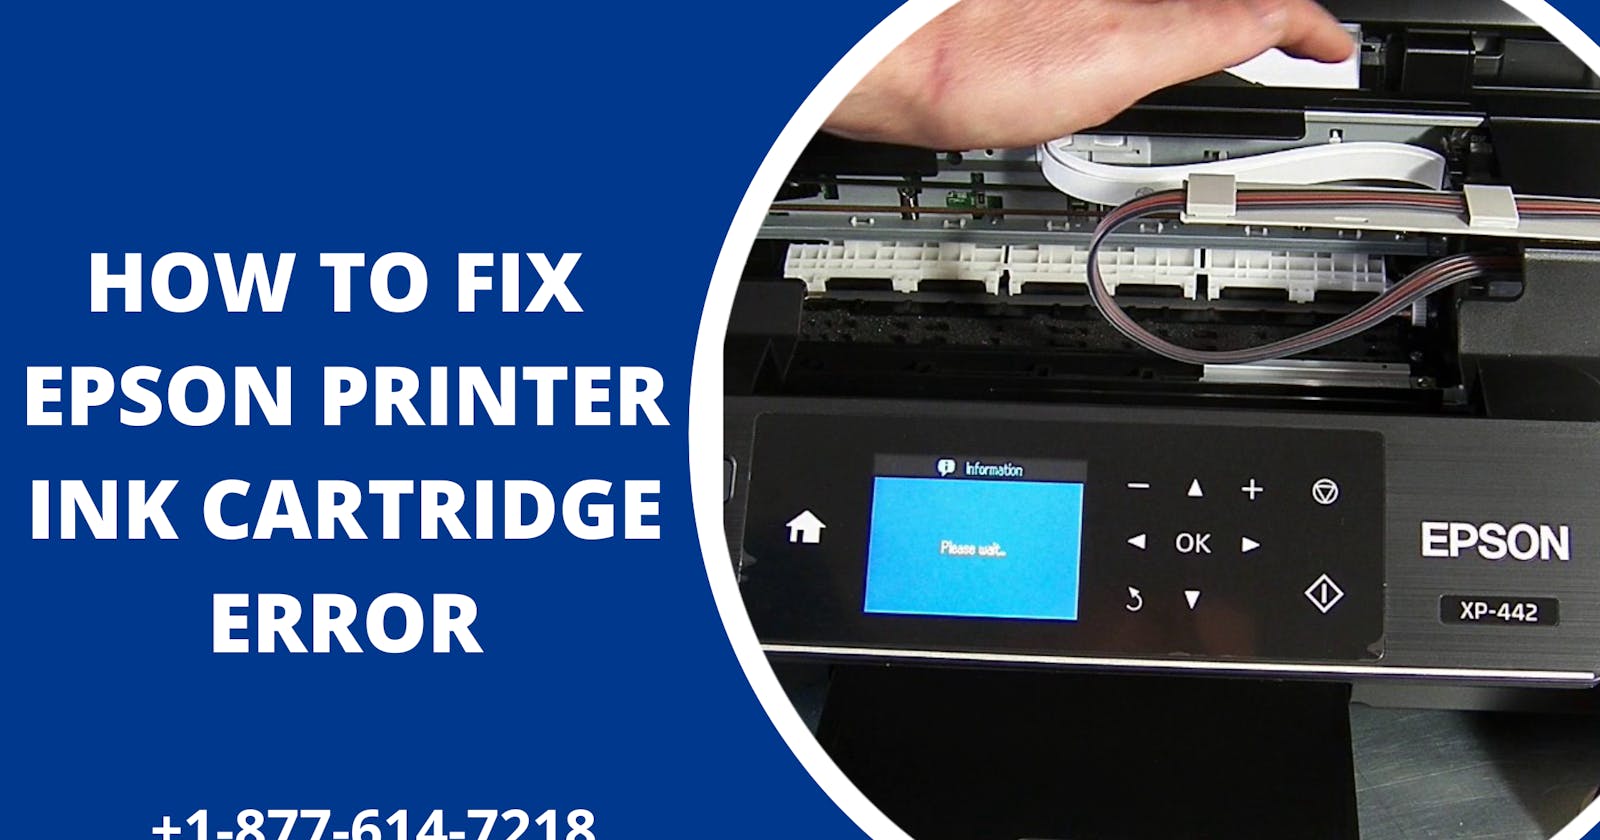 Methods to Fix Epson Printer Ink Cartridge Error